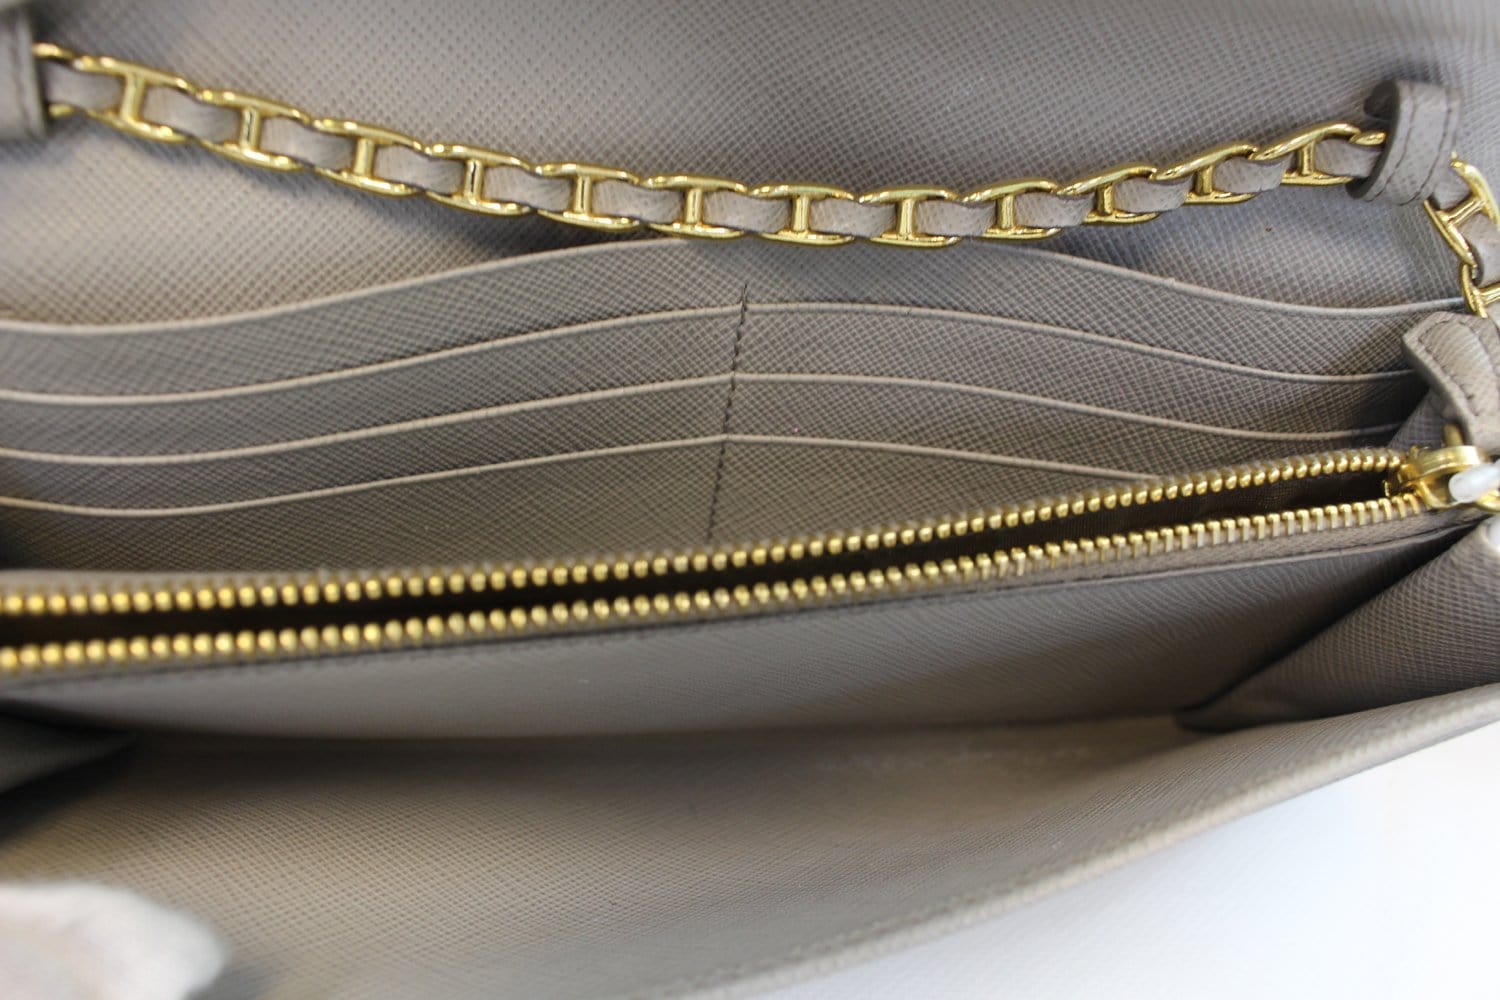 Prada Glicine Saffiano Leather Pattina Chain Shoulder Bag